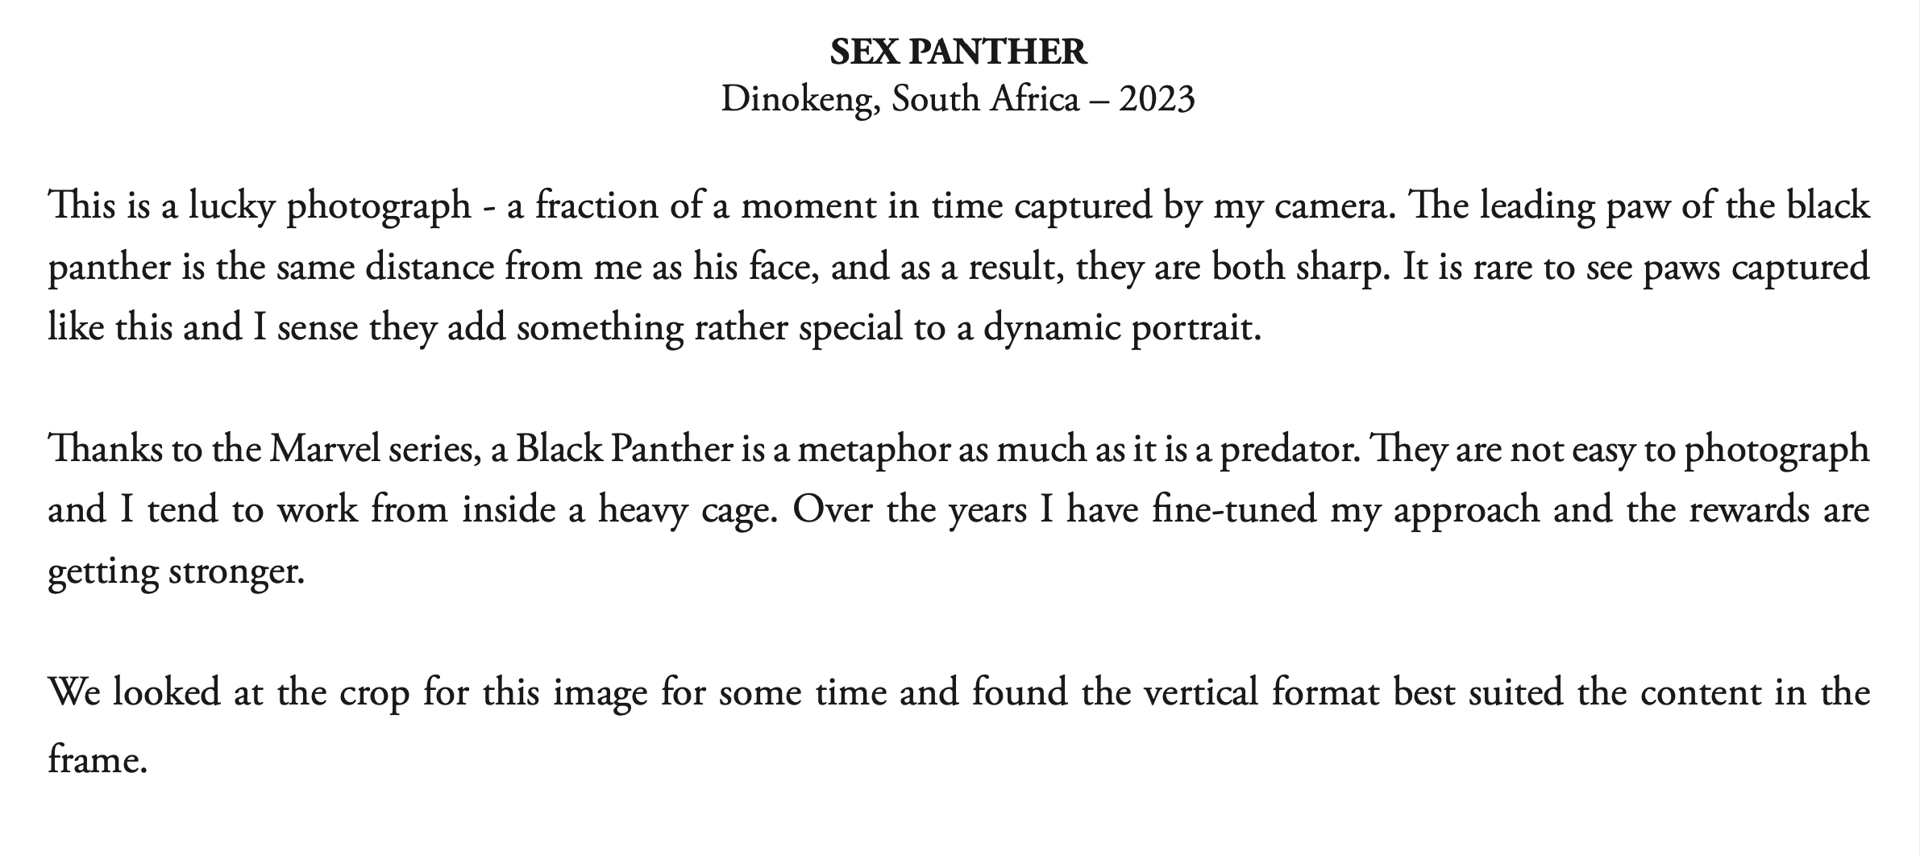 Sex Panther by David Yarrow